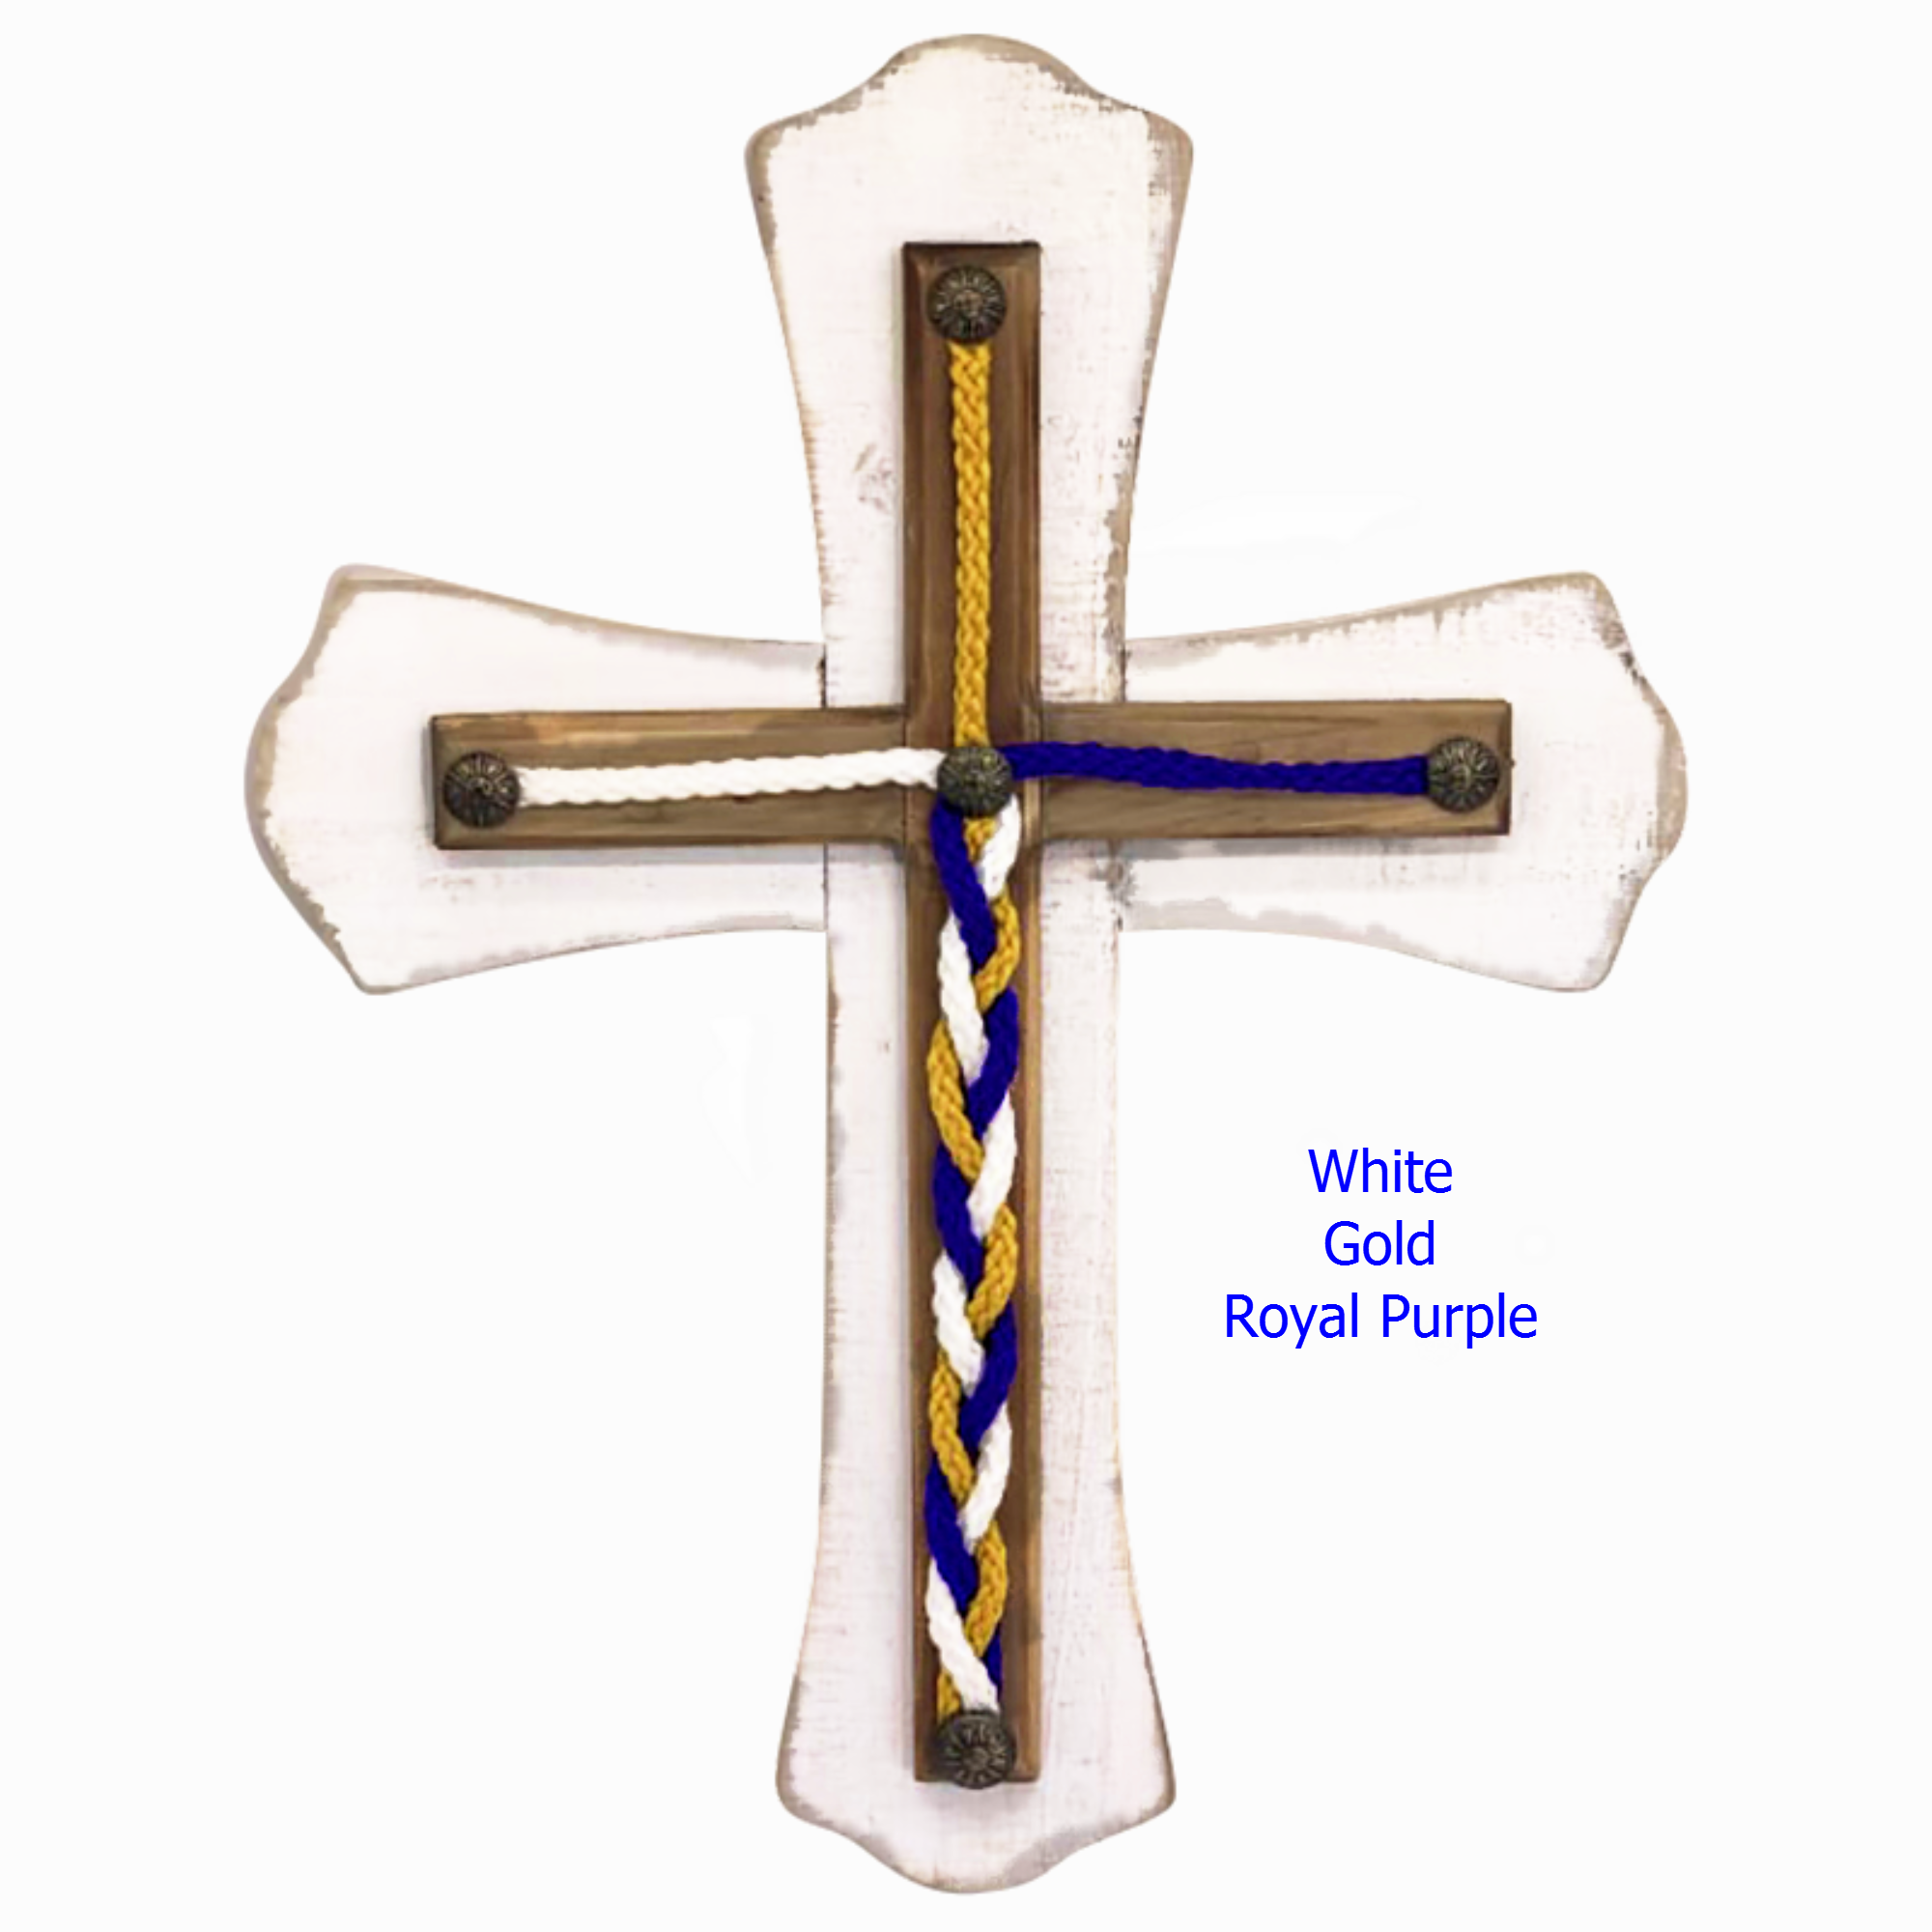 A Cord of Three Strands, Unity Braids Ceremony Cross, 17x12, Non-traditional Ceremony Idea, Handmade Wood Cross